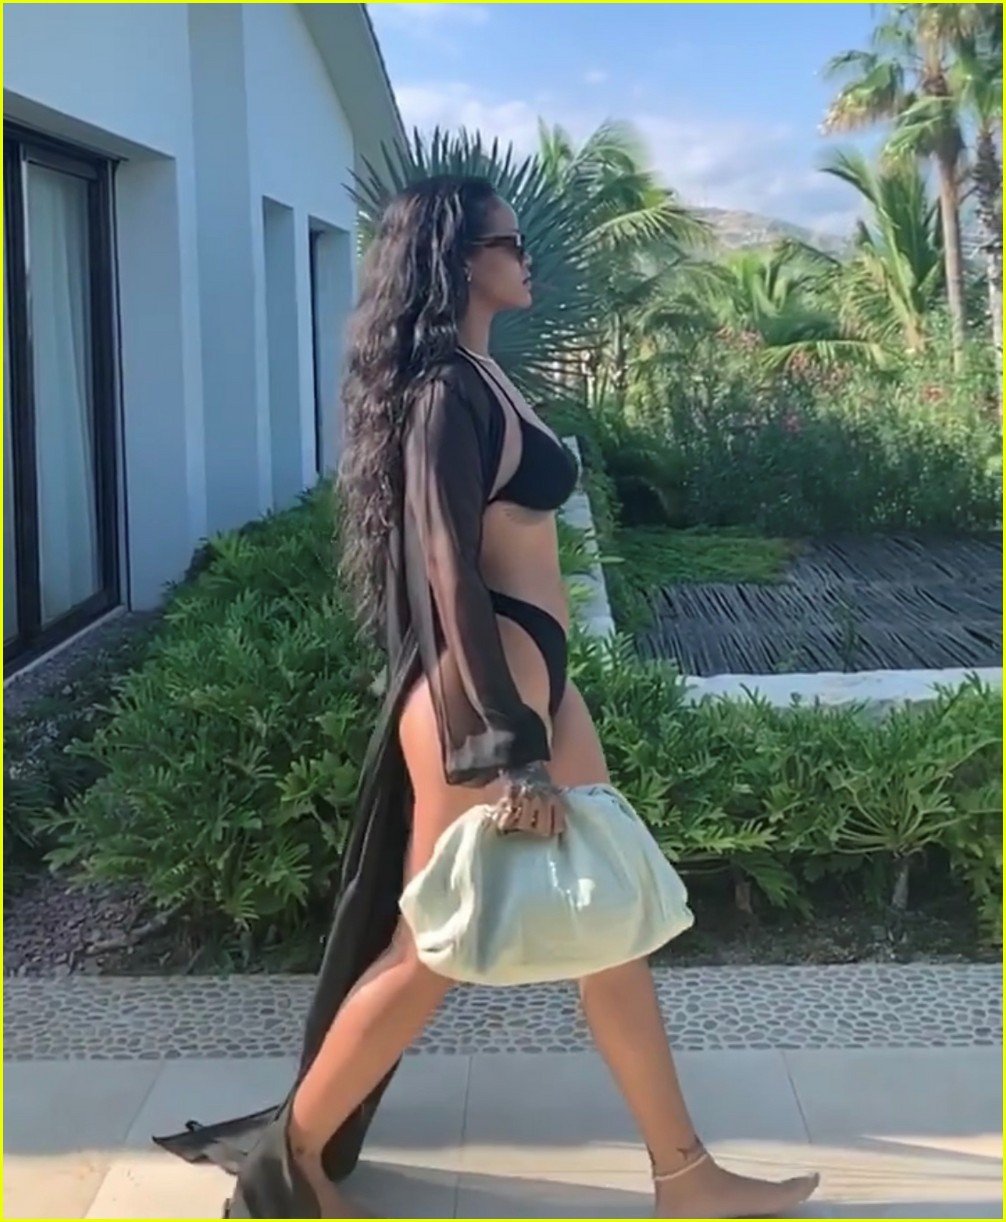 neus Asser De kamer schoonmaken Rihanna Looks So Hot While Slow-Motion Strutting in a Bikini: Photo 4373045  | Rihanna Photos | Just Jared: Entertainment News